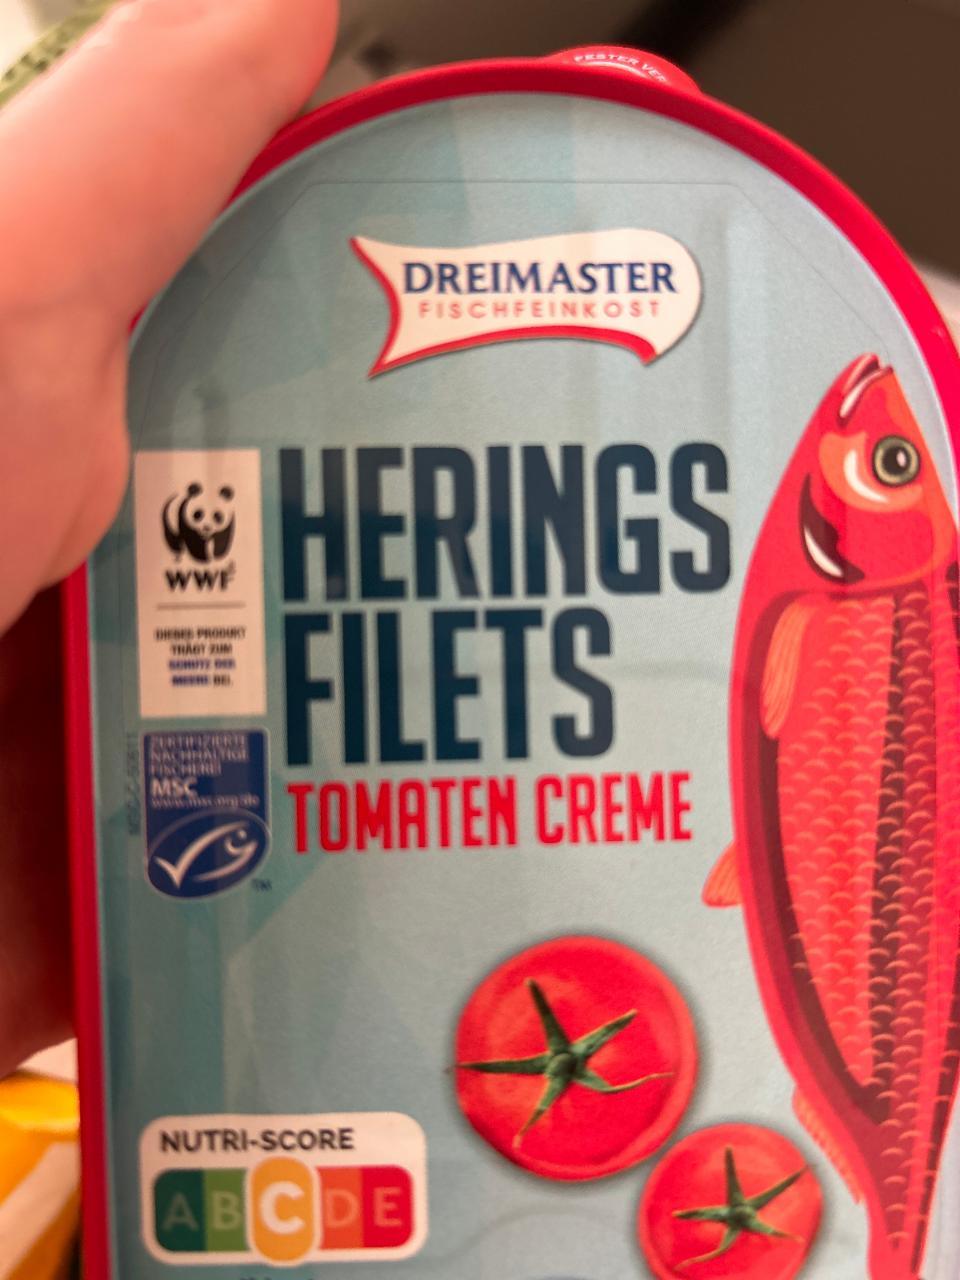 Фото - Herings Filets tomaten-creme Dreimaster